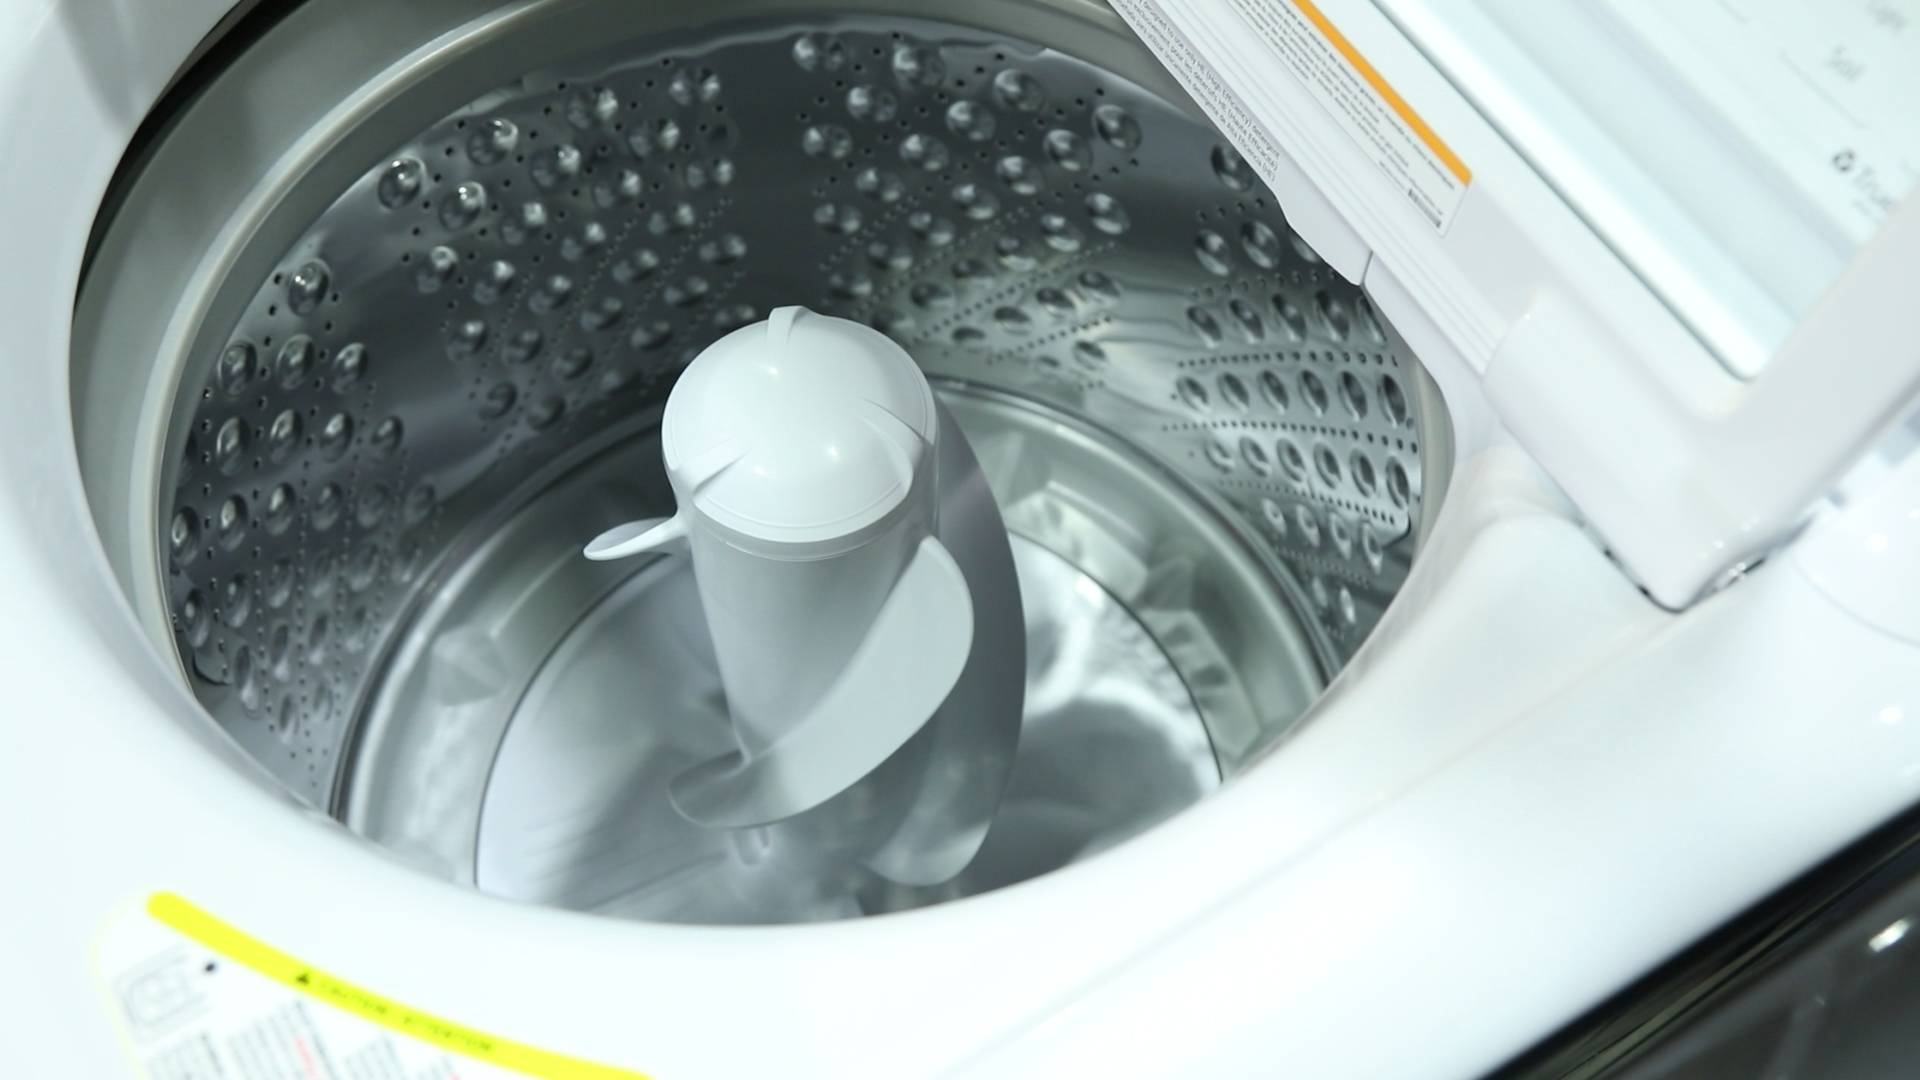 Ultra-Compact Washing Machines : miniature washing machine